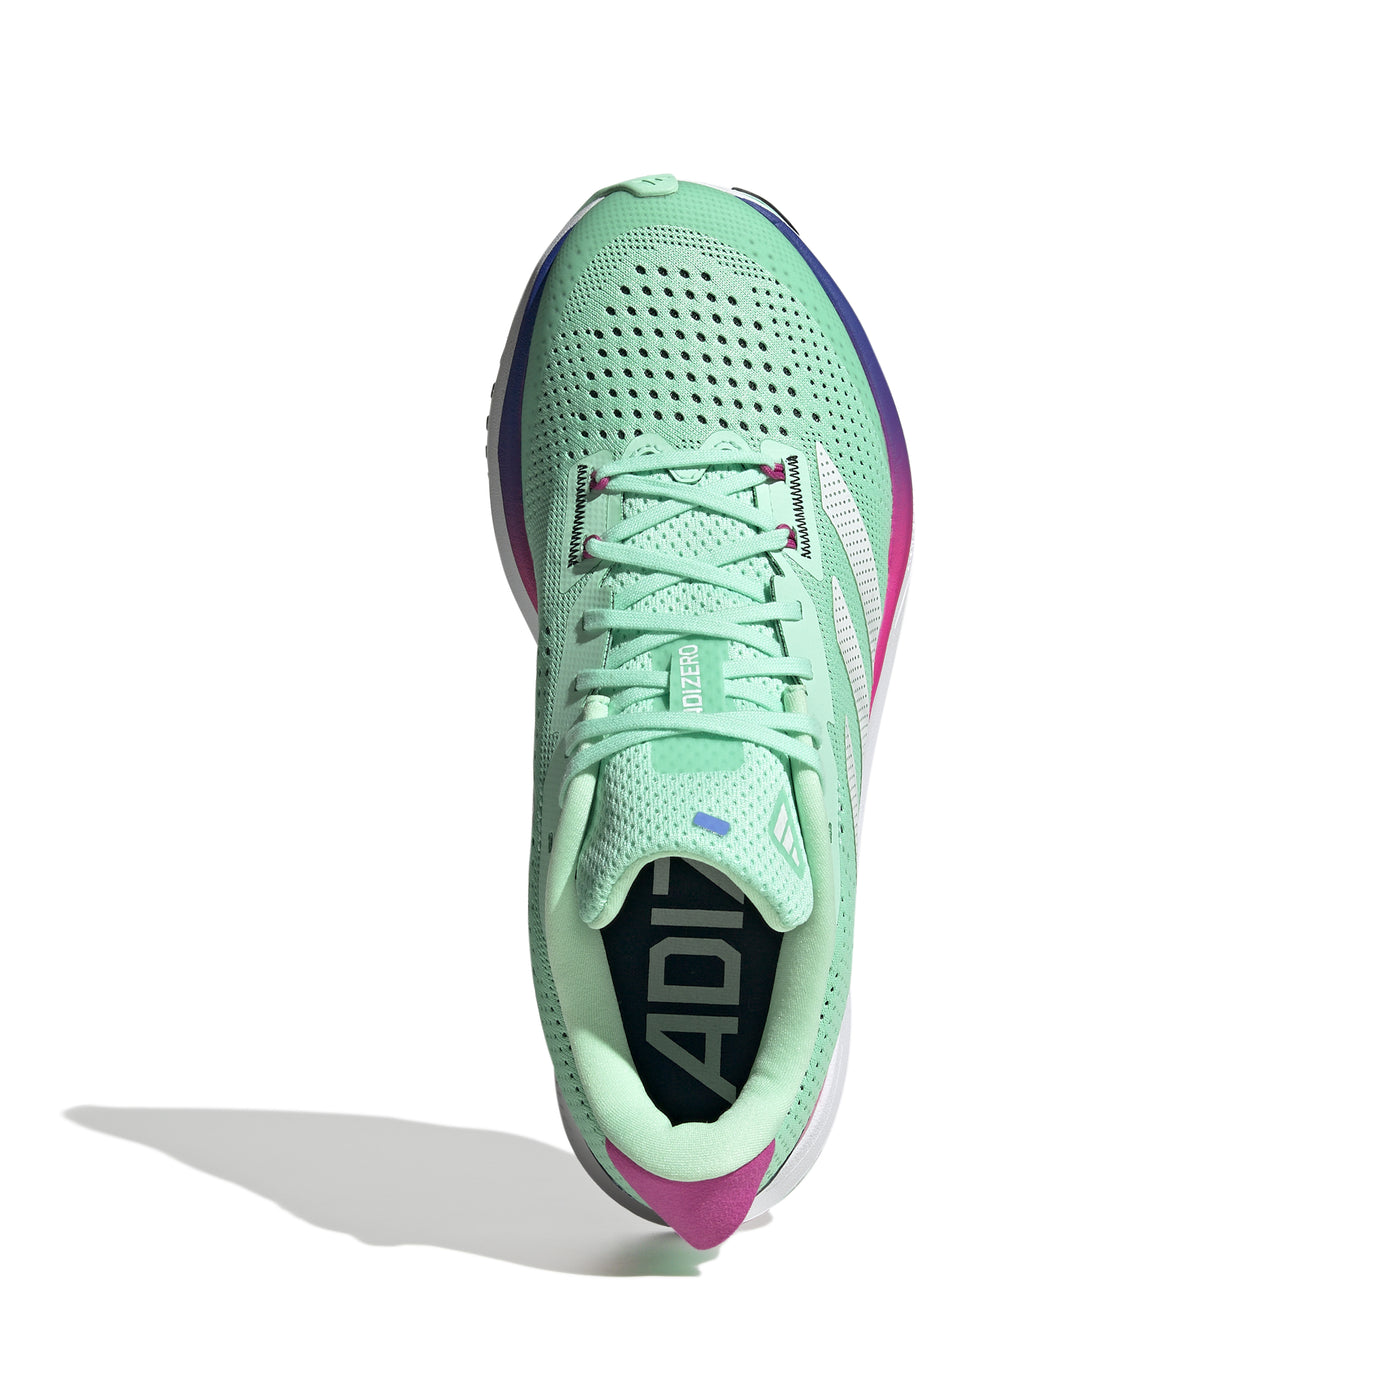 adidas AdiZero SL | The Runners Shop Toronto Canada